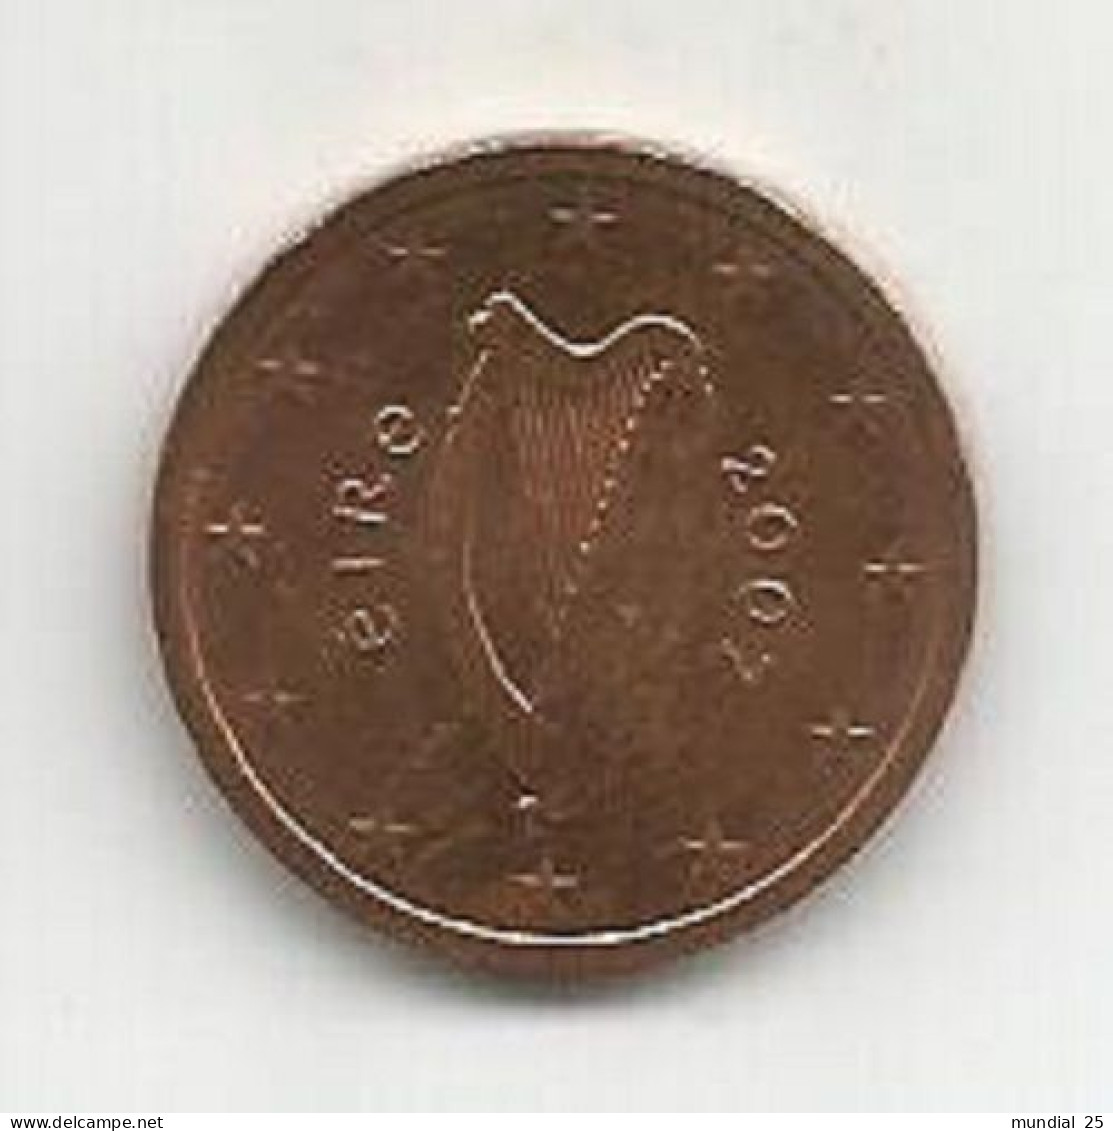 IRELAND 2 EURO CENT 2007 - Ierland